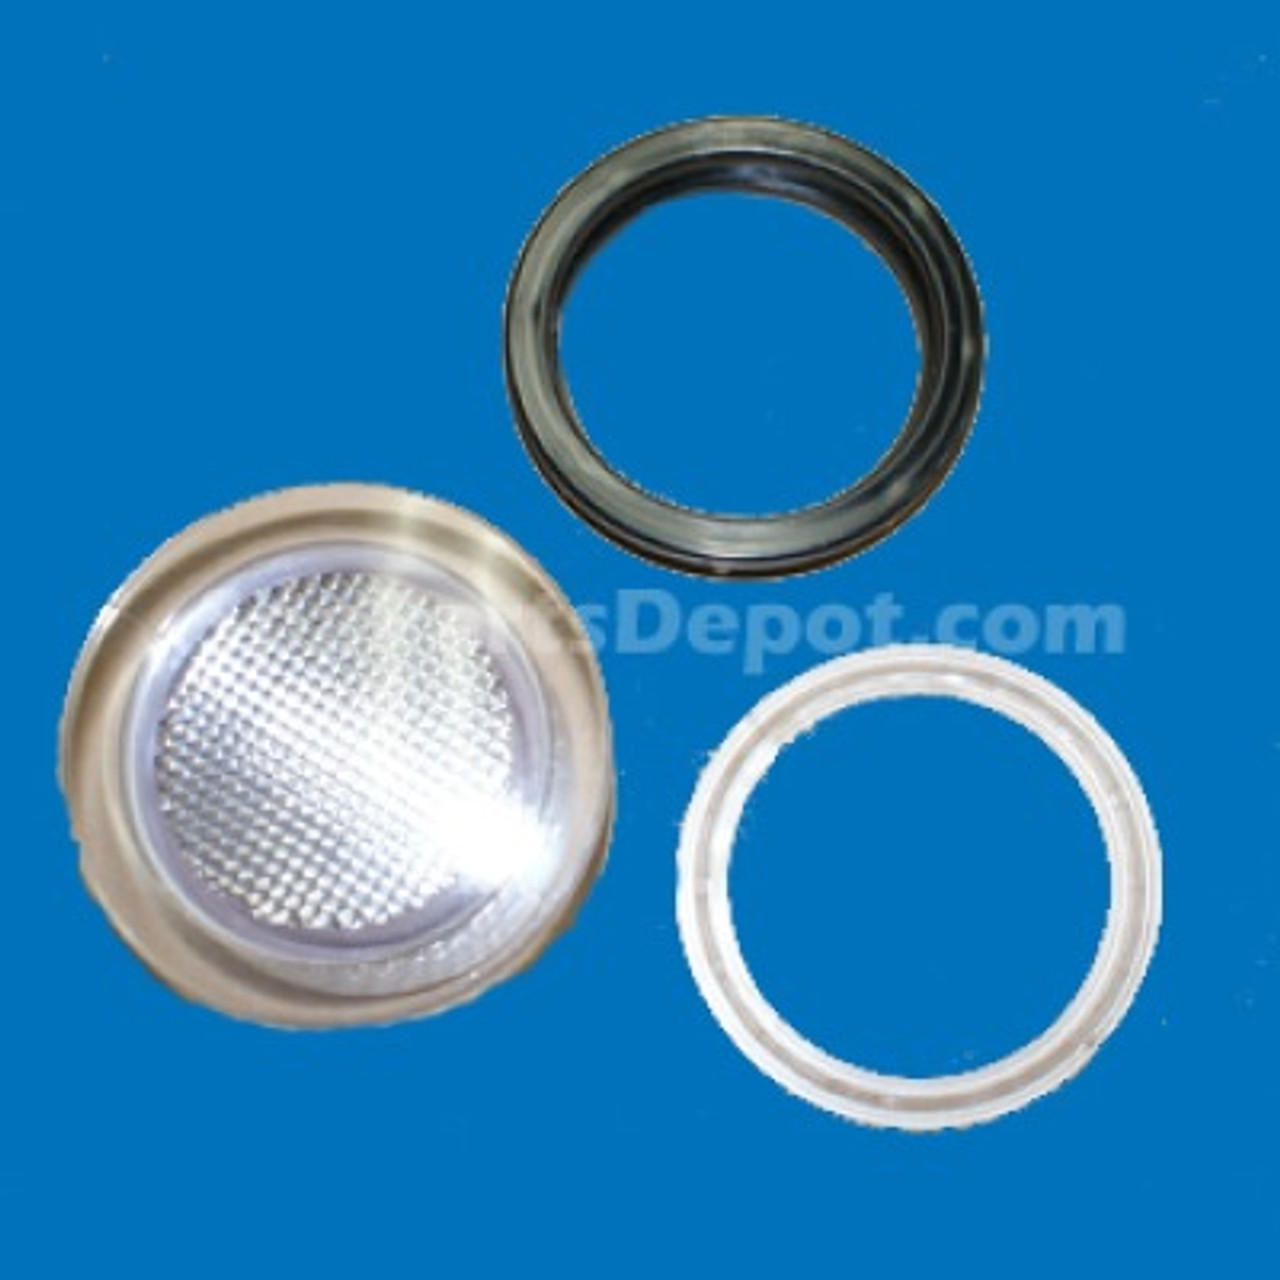 Caldera Spas Light Fixture - Multiple Years - See Product Description for Details - 73370